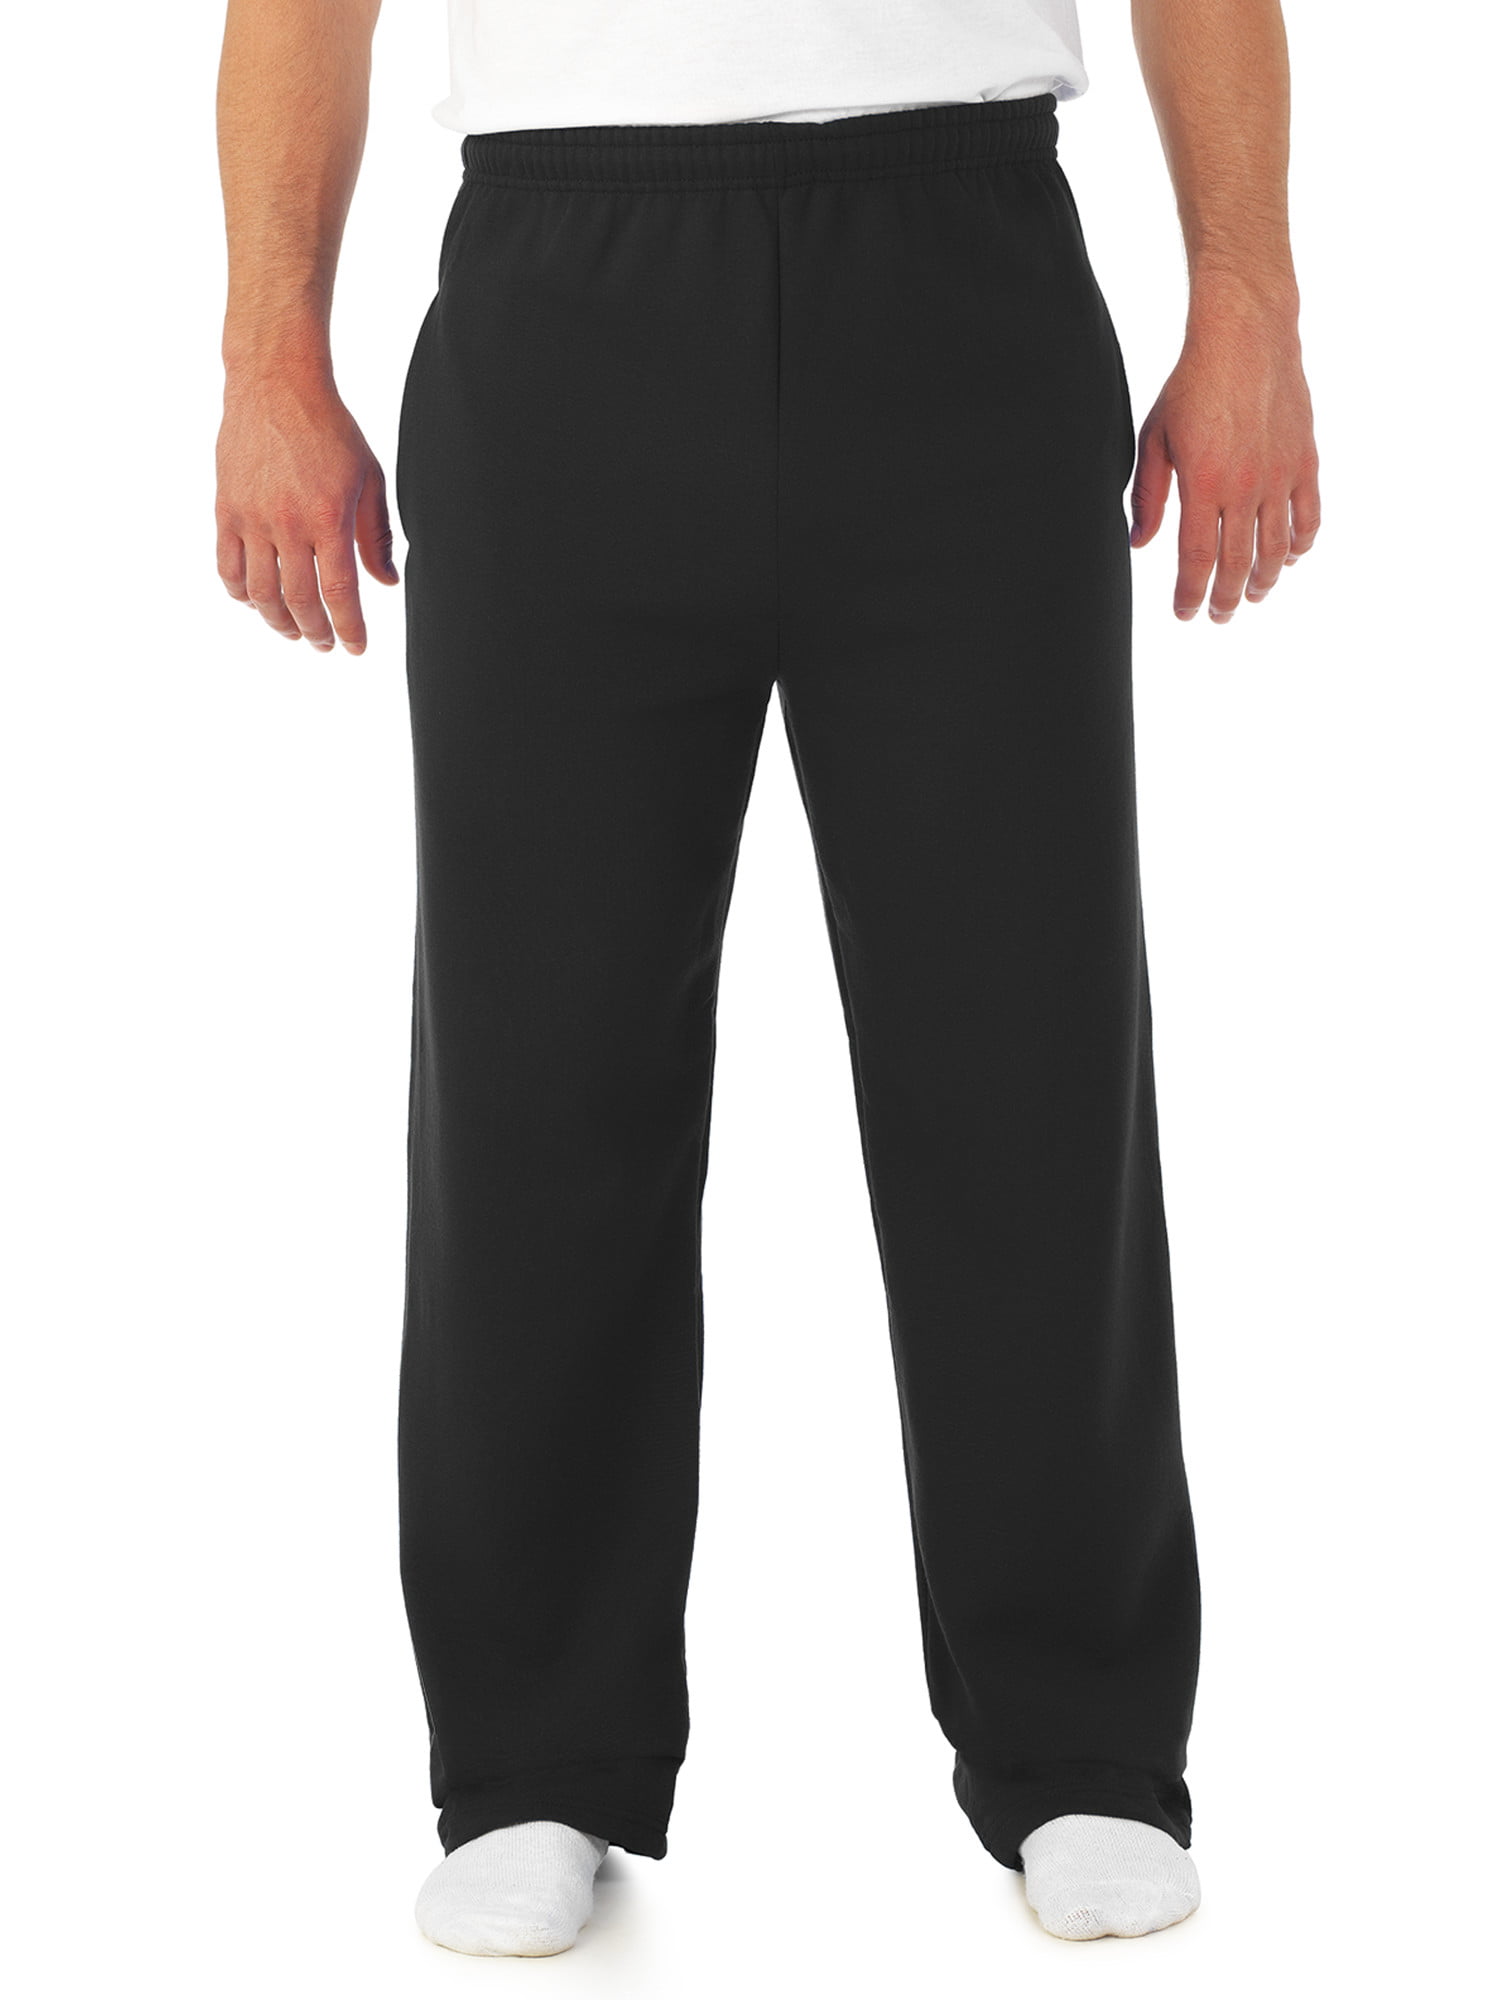 Men’s Soft Medium-Weight Fleece Open Bottom Sweatpants, with pockets ...